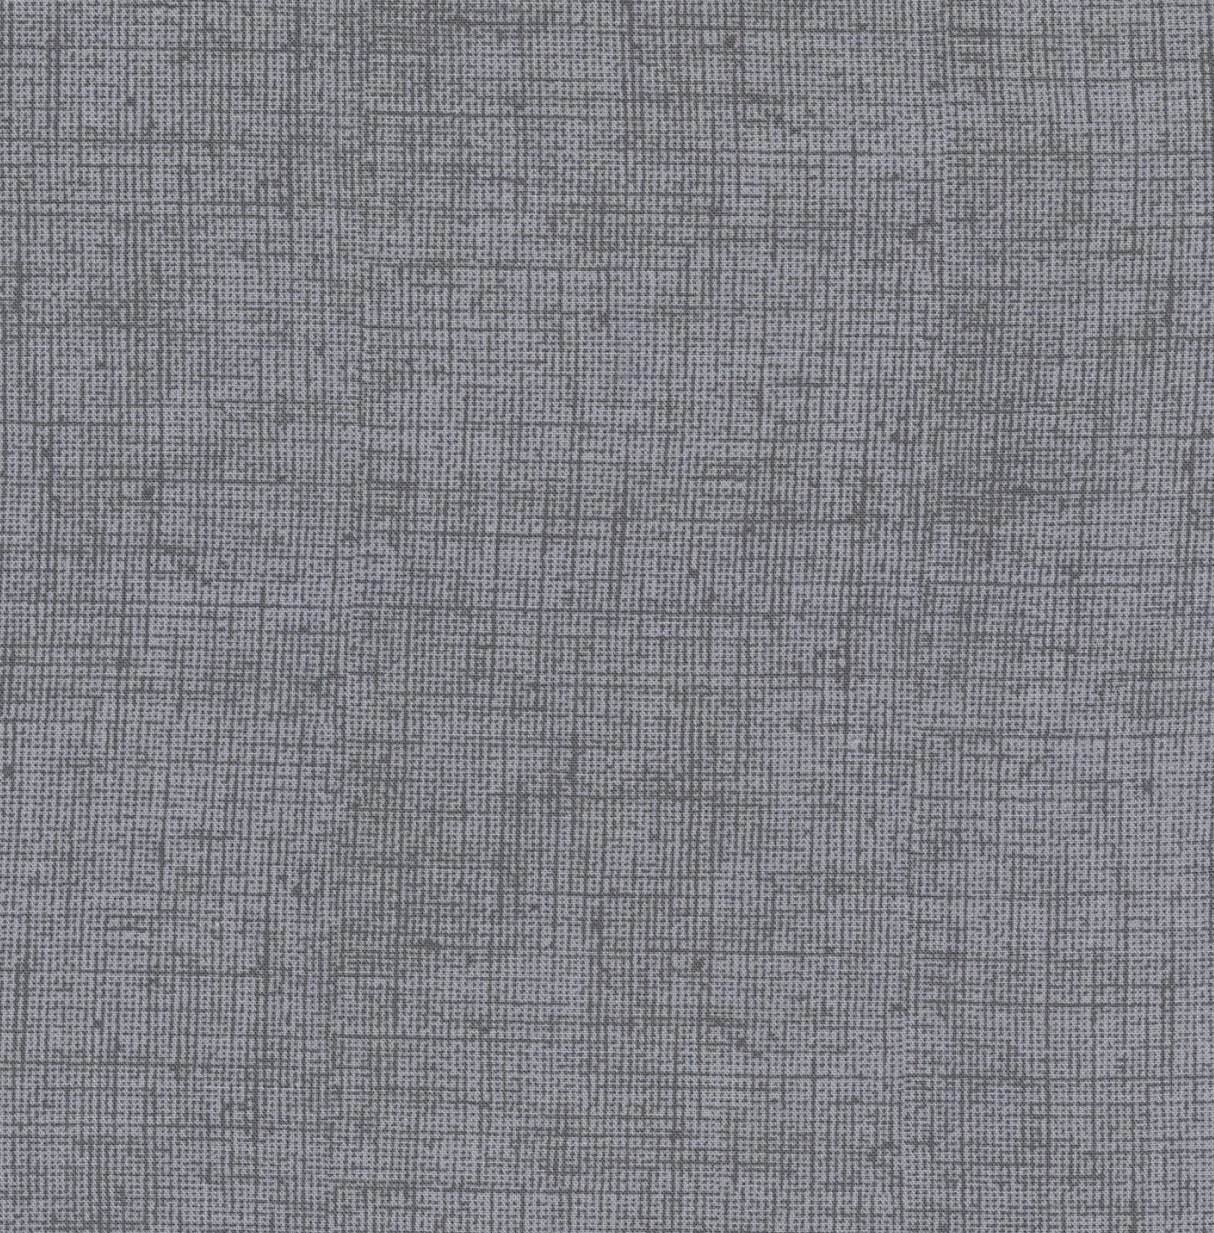 Slate Mix Blender Texture Cotton Fabric By Timeless Treasures Fabrics C 7200 Slate